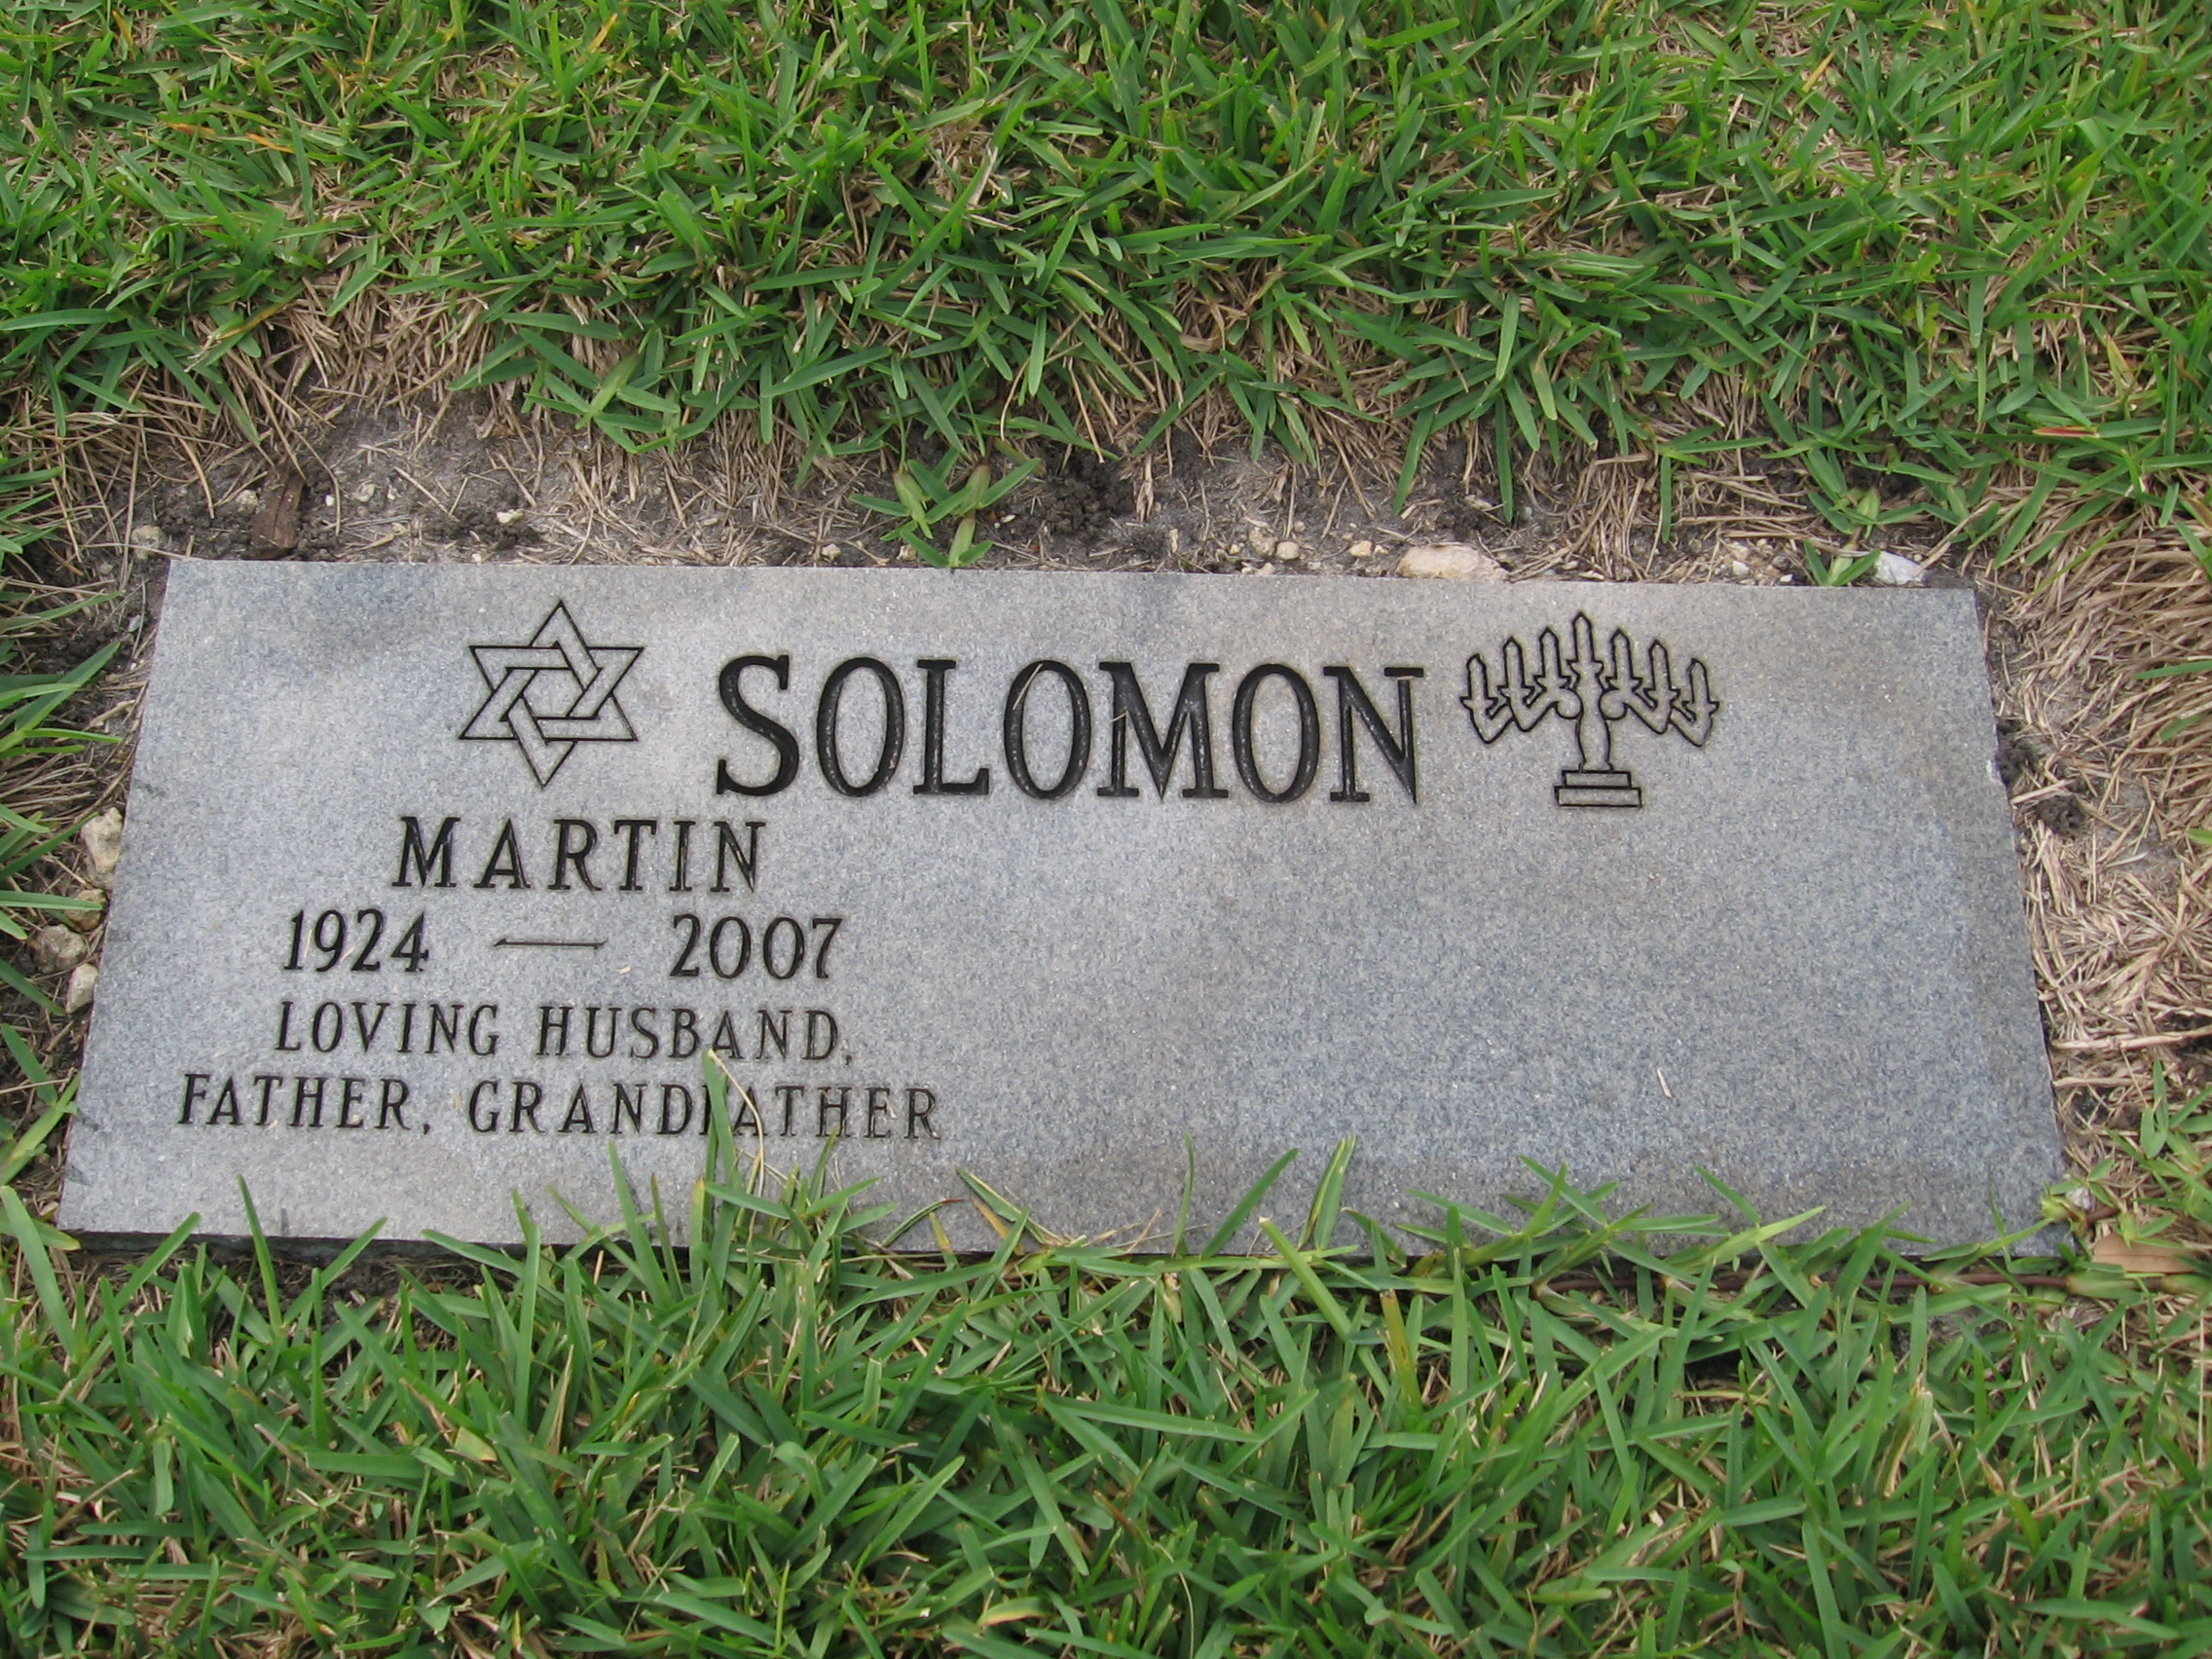 Martin Solomon